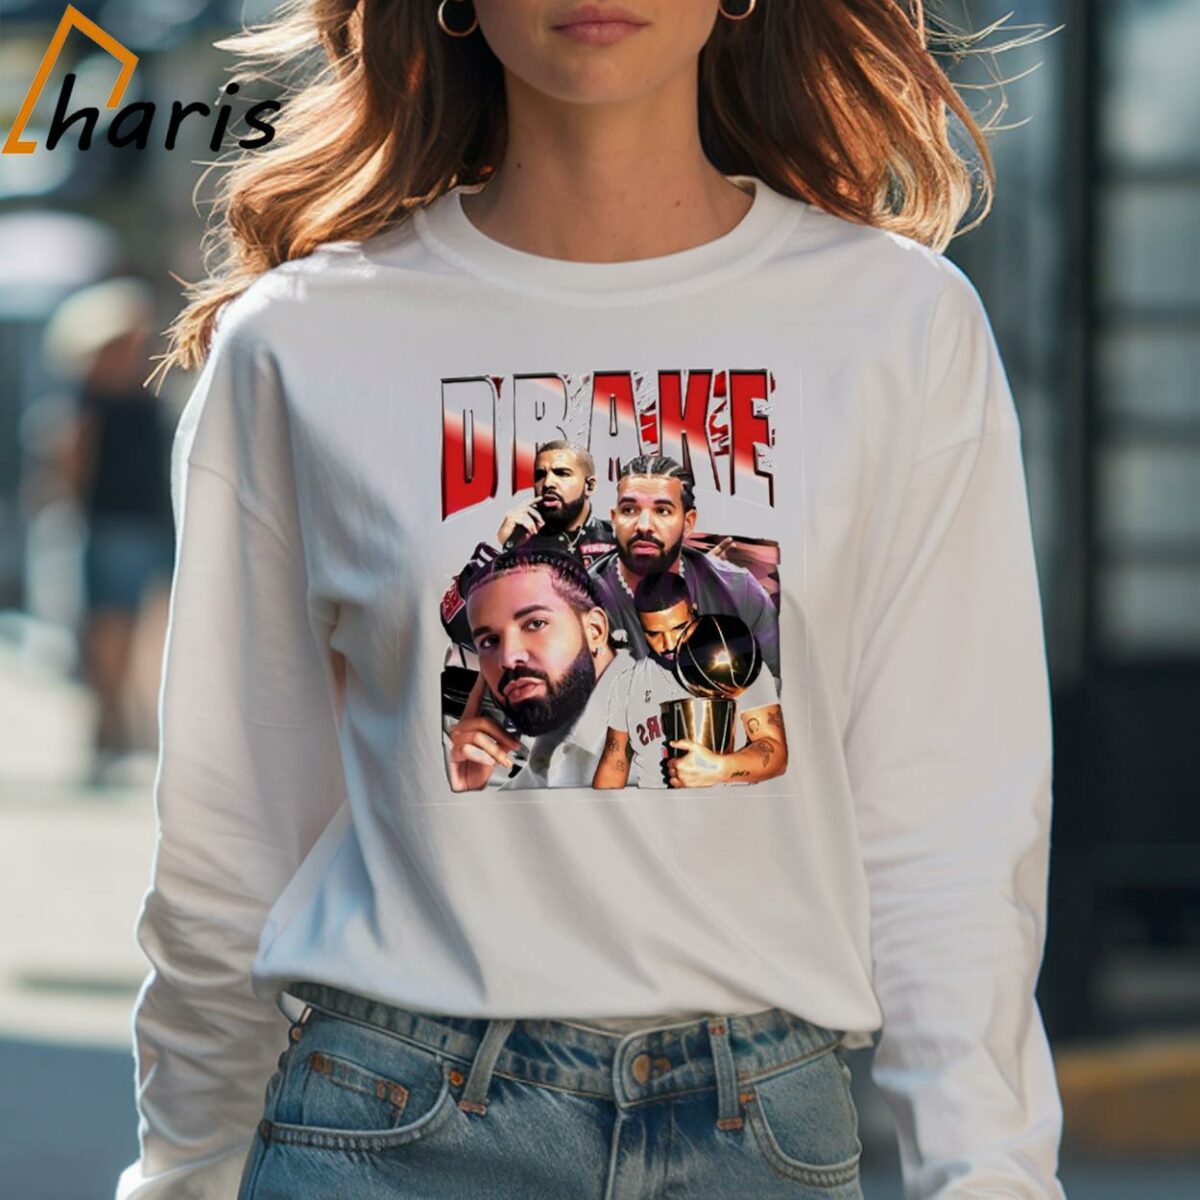 Drake Canadian Rapper Shirt 4 Long sleeve shirt